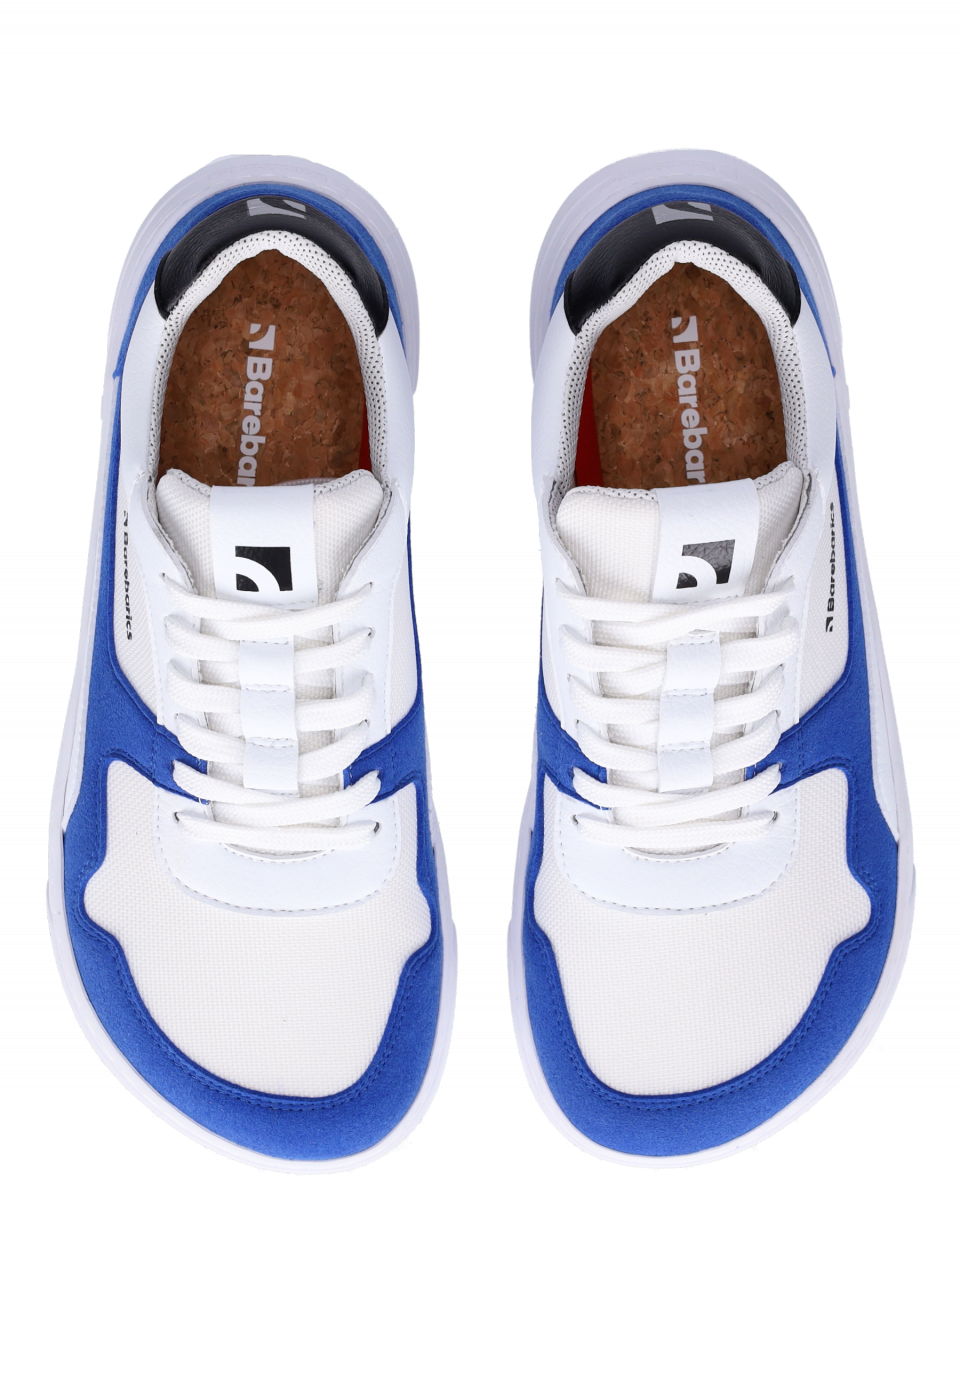 Barefoot tenisky Barebarics Zing - White & Blue